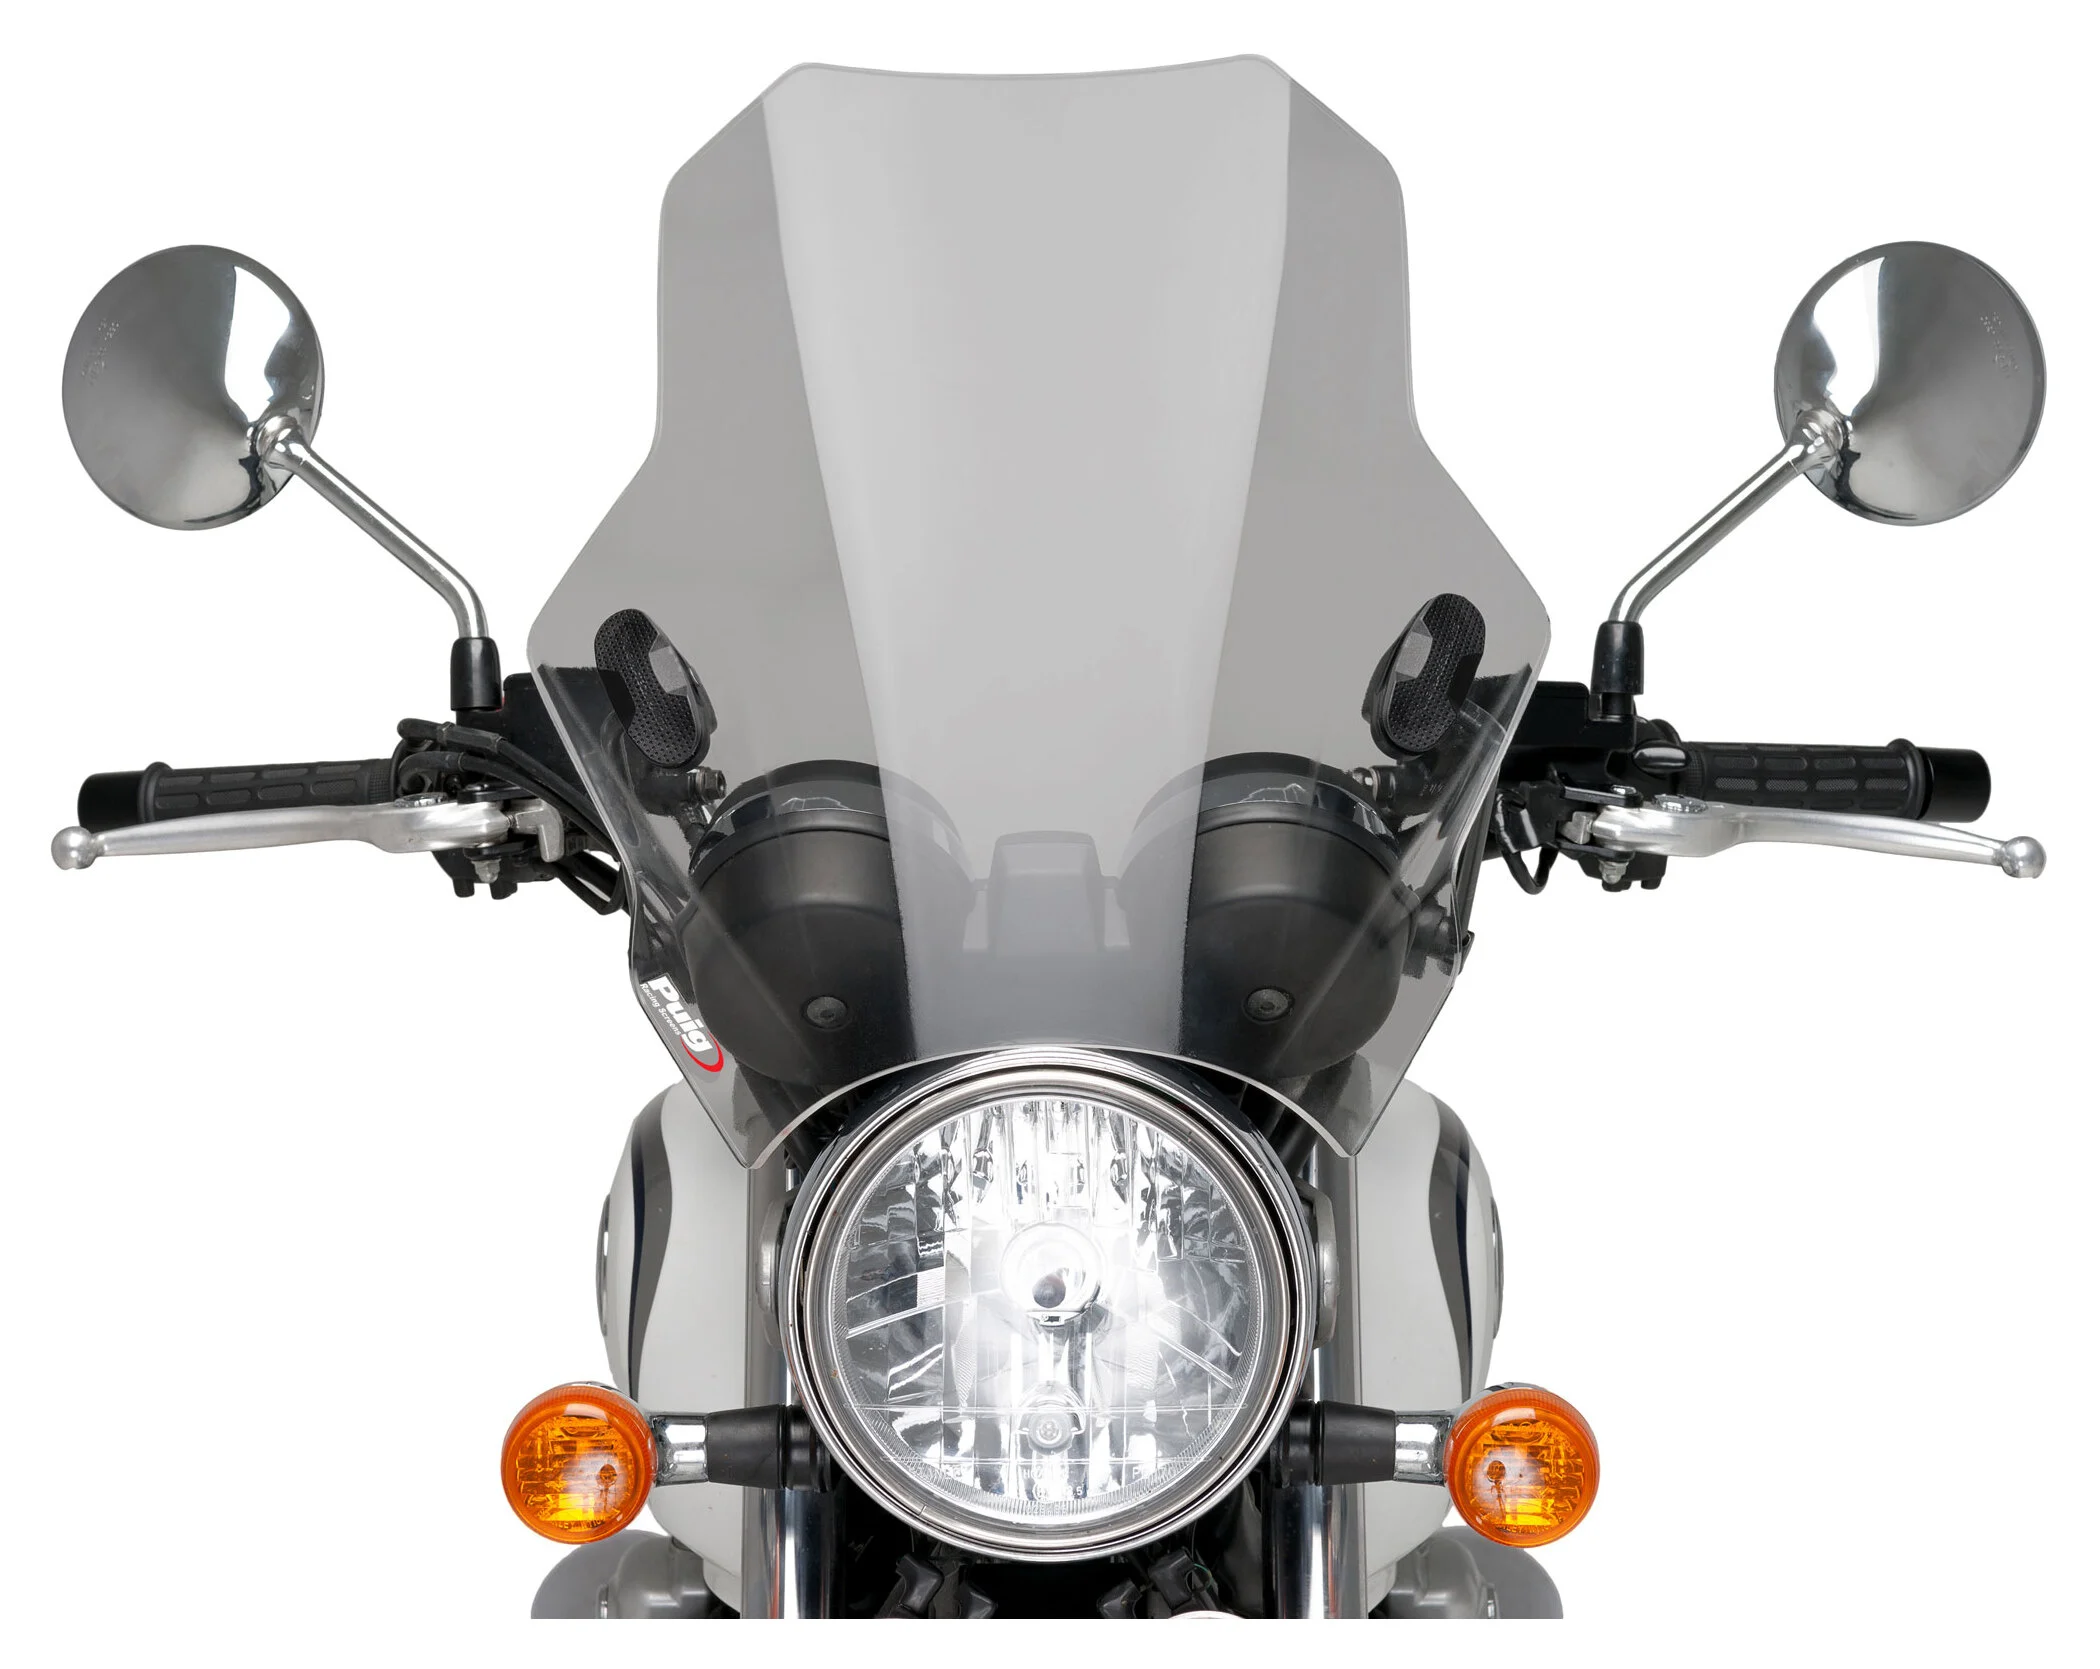 Moto Windscreen For cupula moto vmax 1200 triumph bonneville yamaha mt 03  Universial Motorcycle Windshield Deflector Cafe